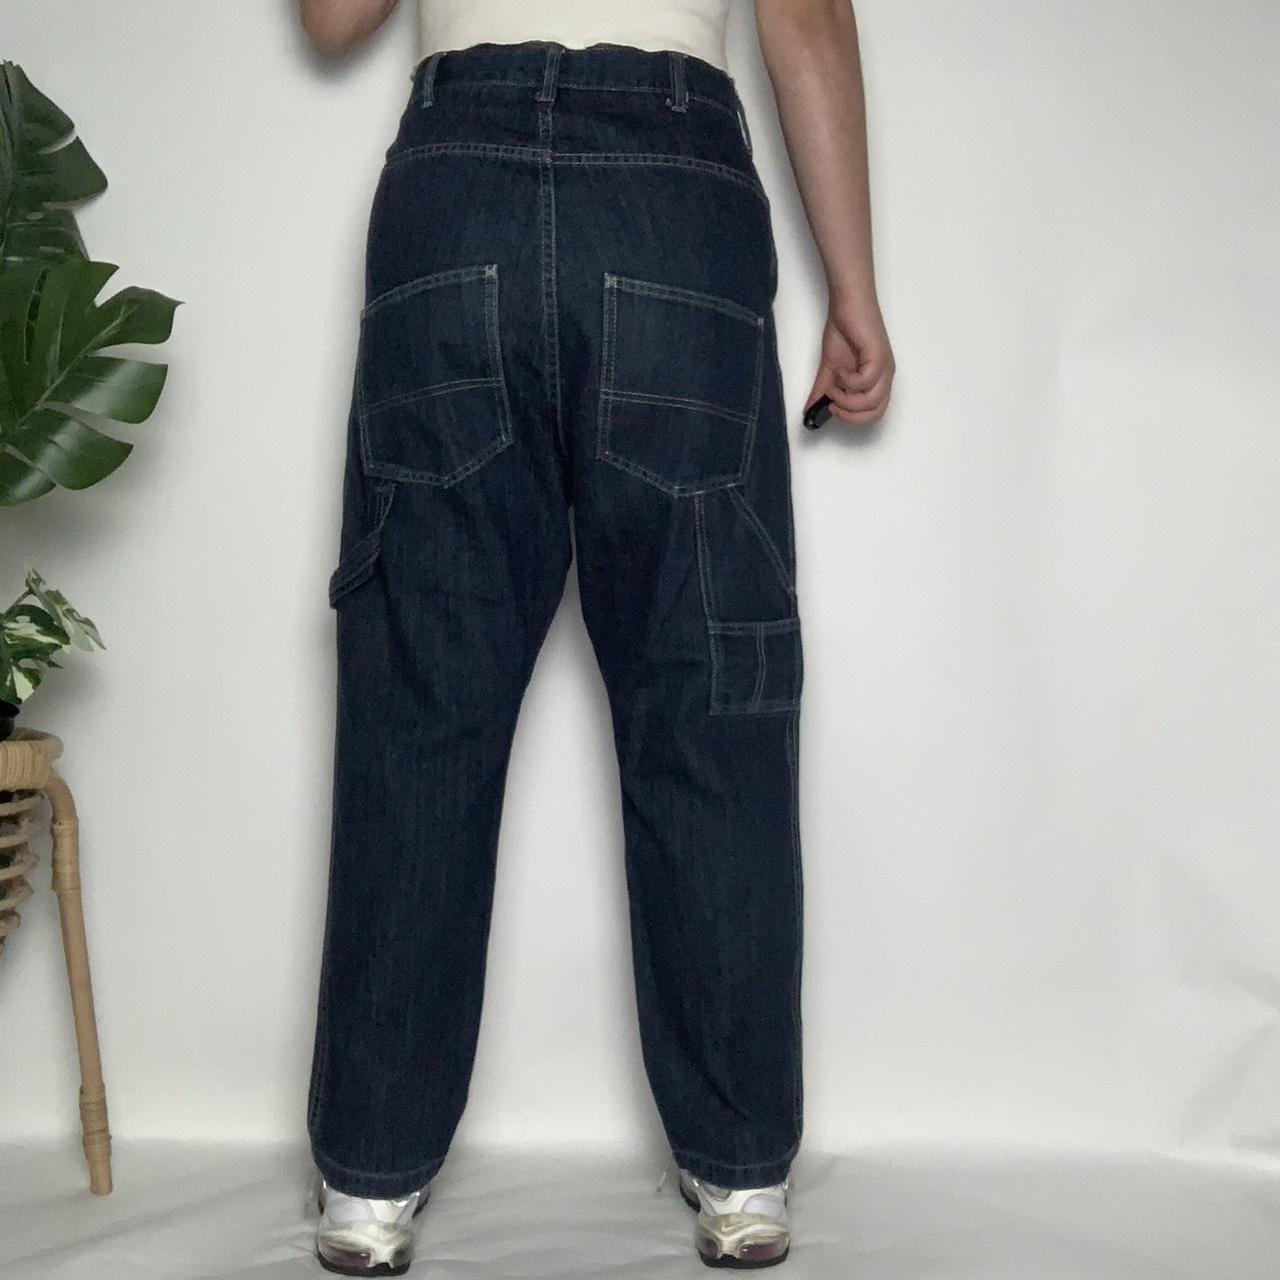 Vintage 90s deadstock rapper style dark wash cargo jeans